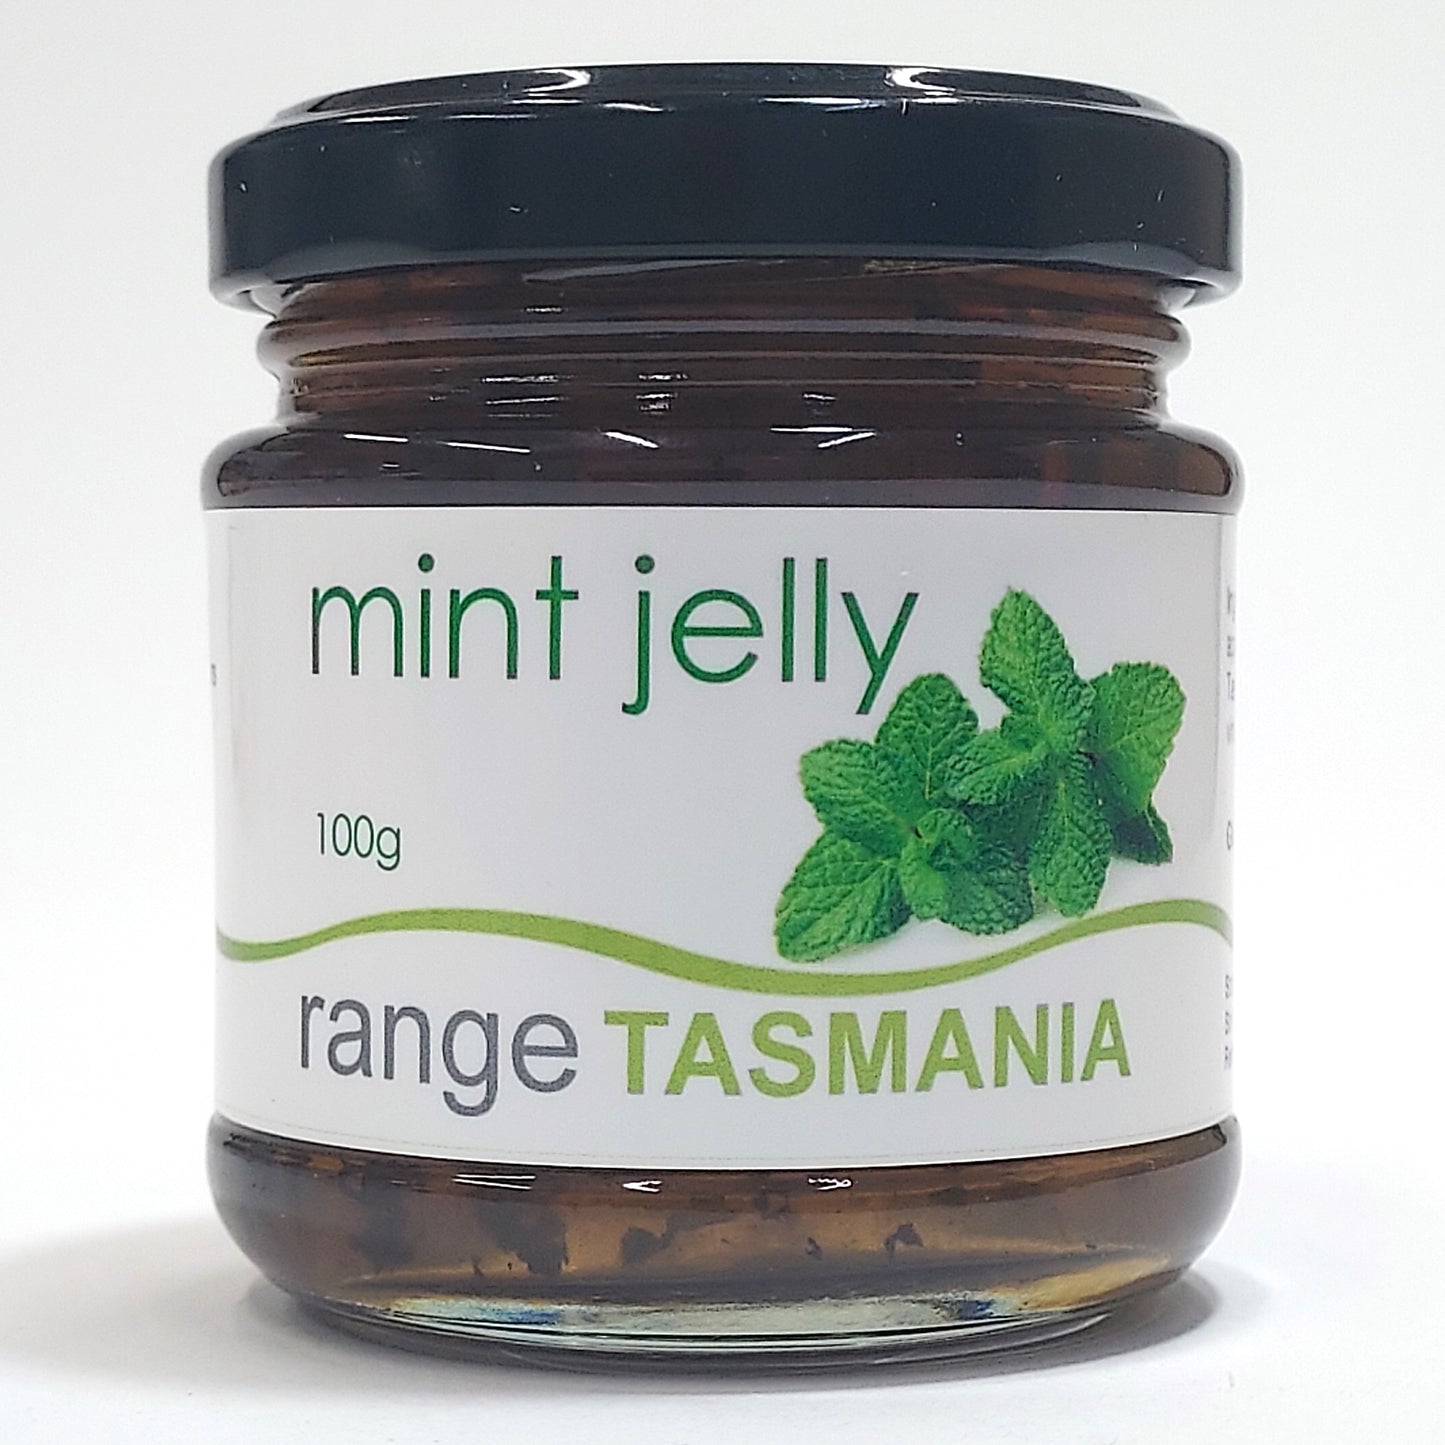 a 100 gram jar of range Tasmania mint jelly